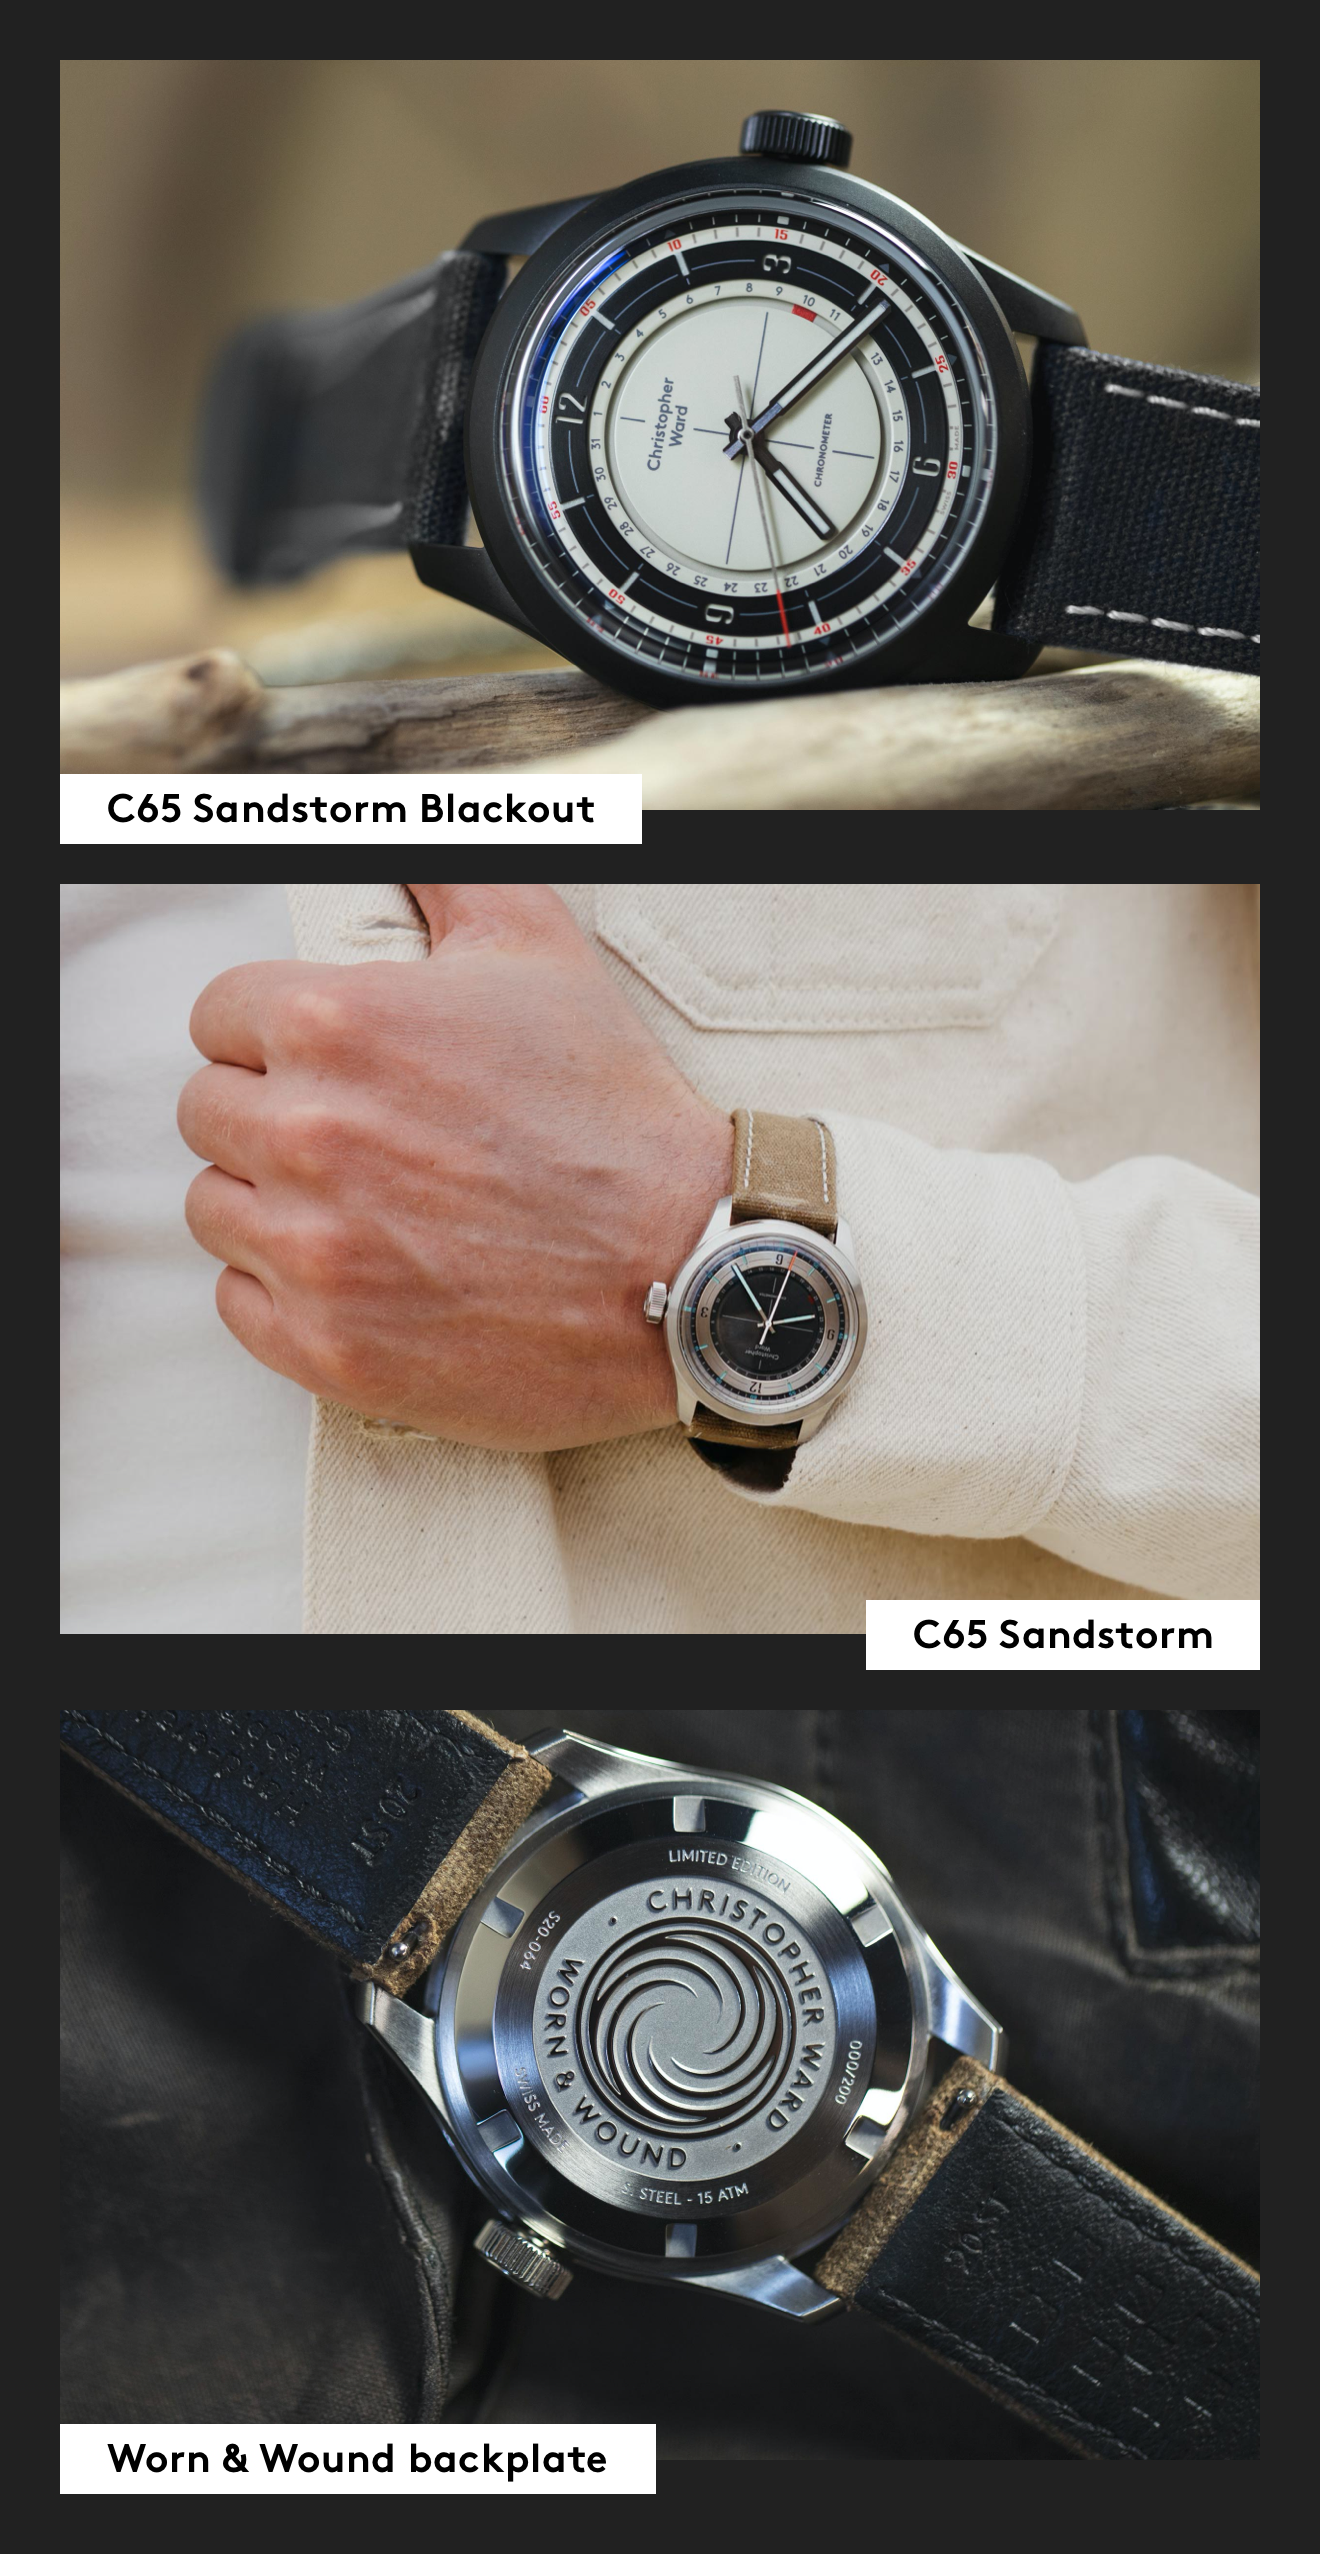 C65 Sandstorm and Sandstorm Blackout Chronometers